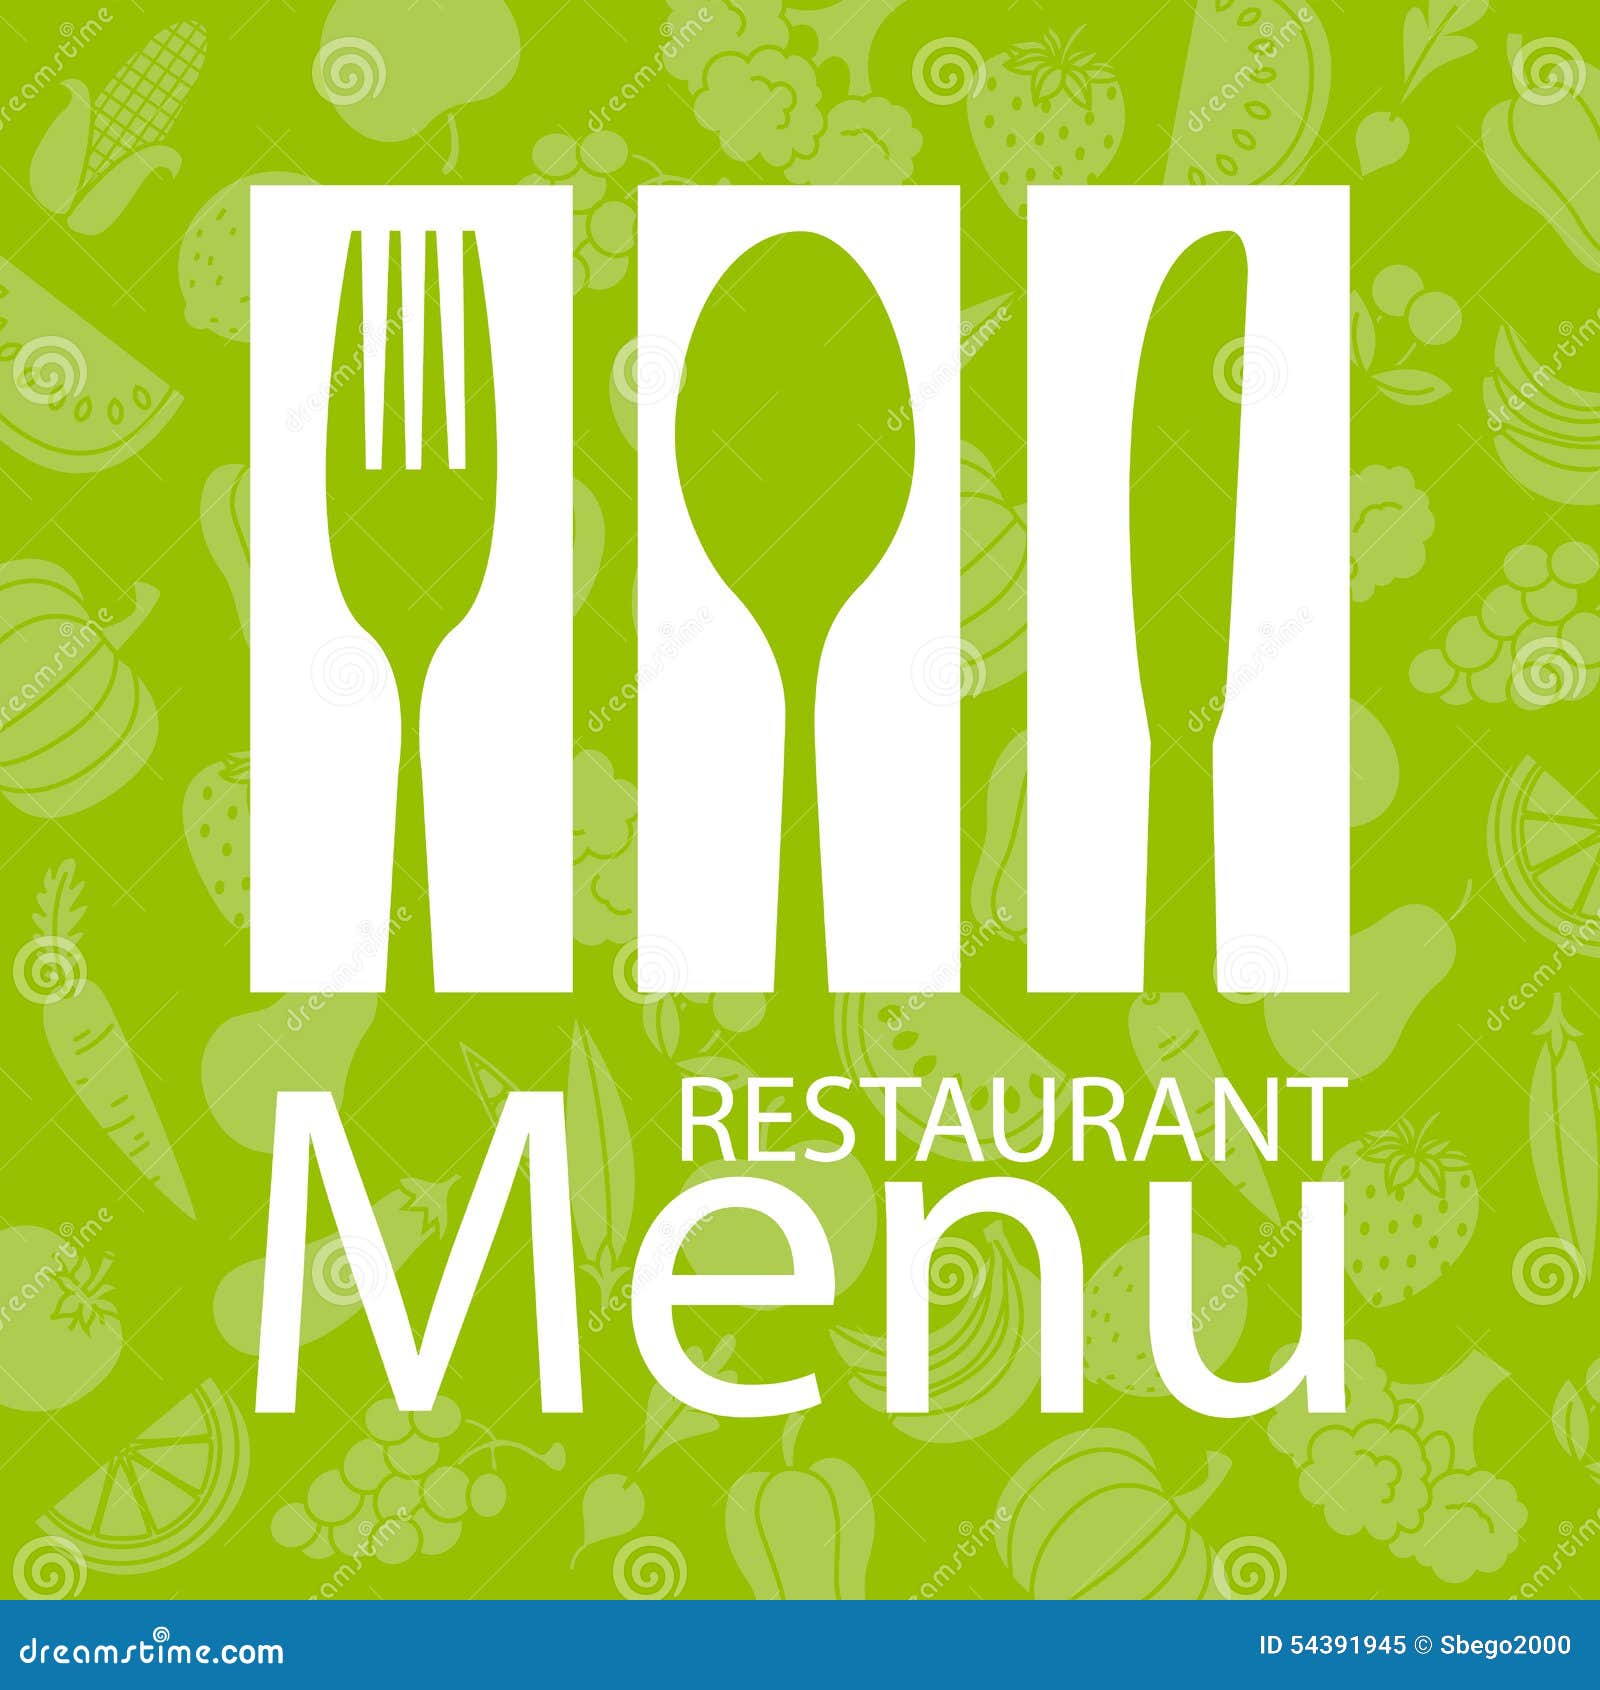 Restaurant menu card stock vector. Illustration of grape - 54391945